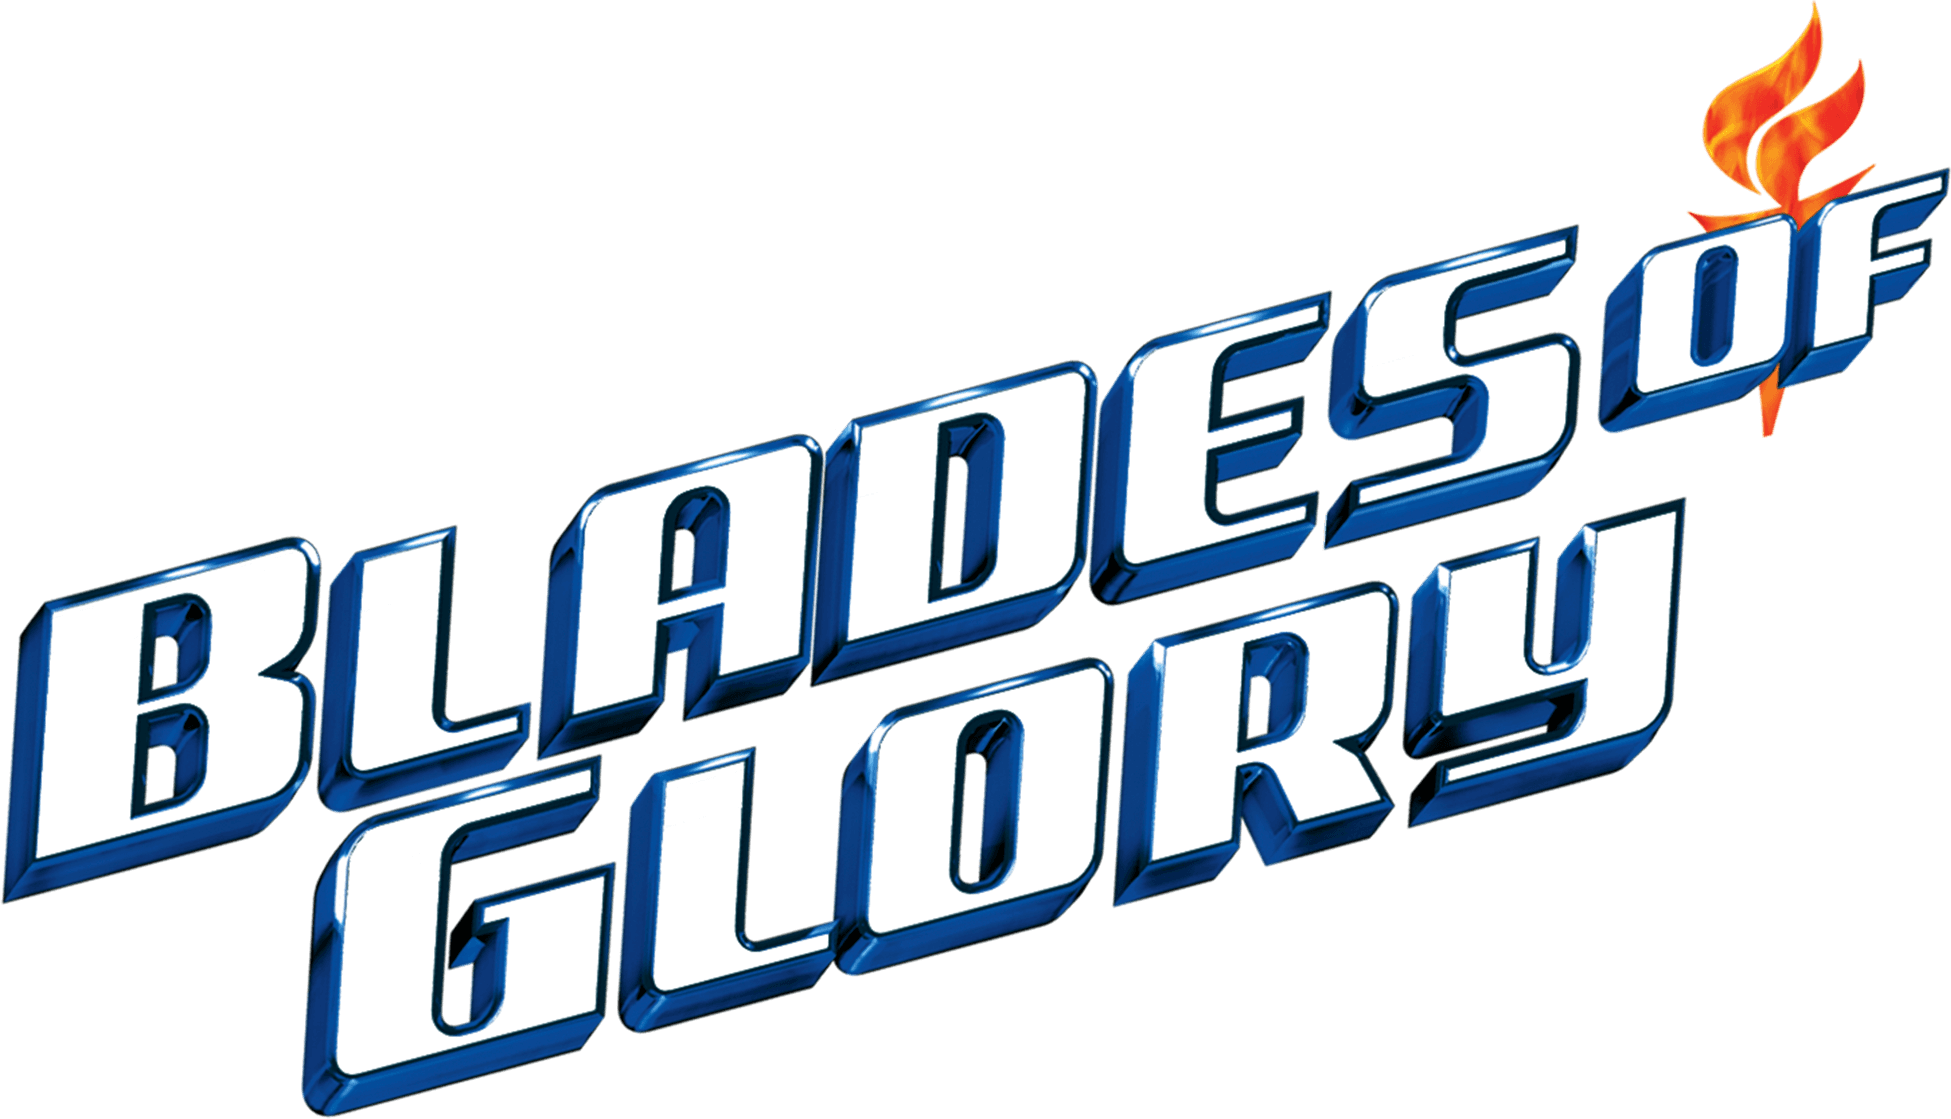 Blades of Glory logo